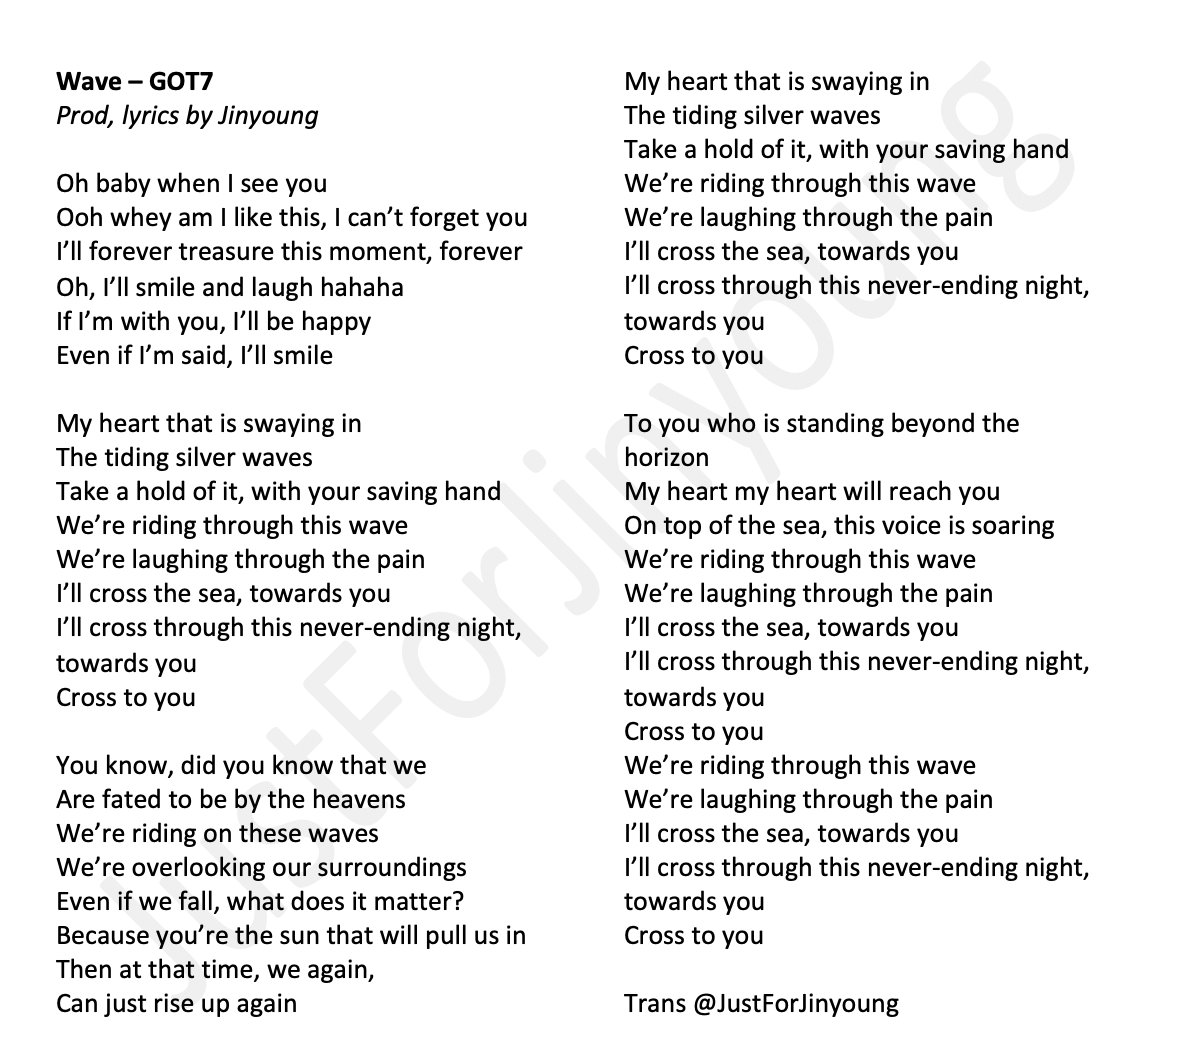 Just For Jinyoung Eng Wave Lyrics Prod Lyrics By Jinyoung Jinyoung 진영 Got7 갓세븐 Got7official Got7 Lastpiece Jfj Trans